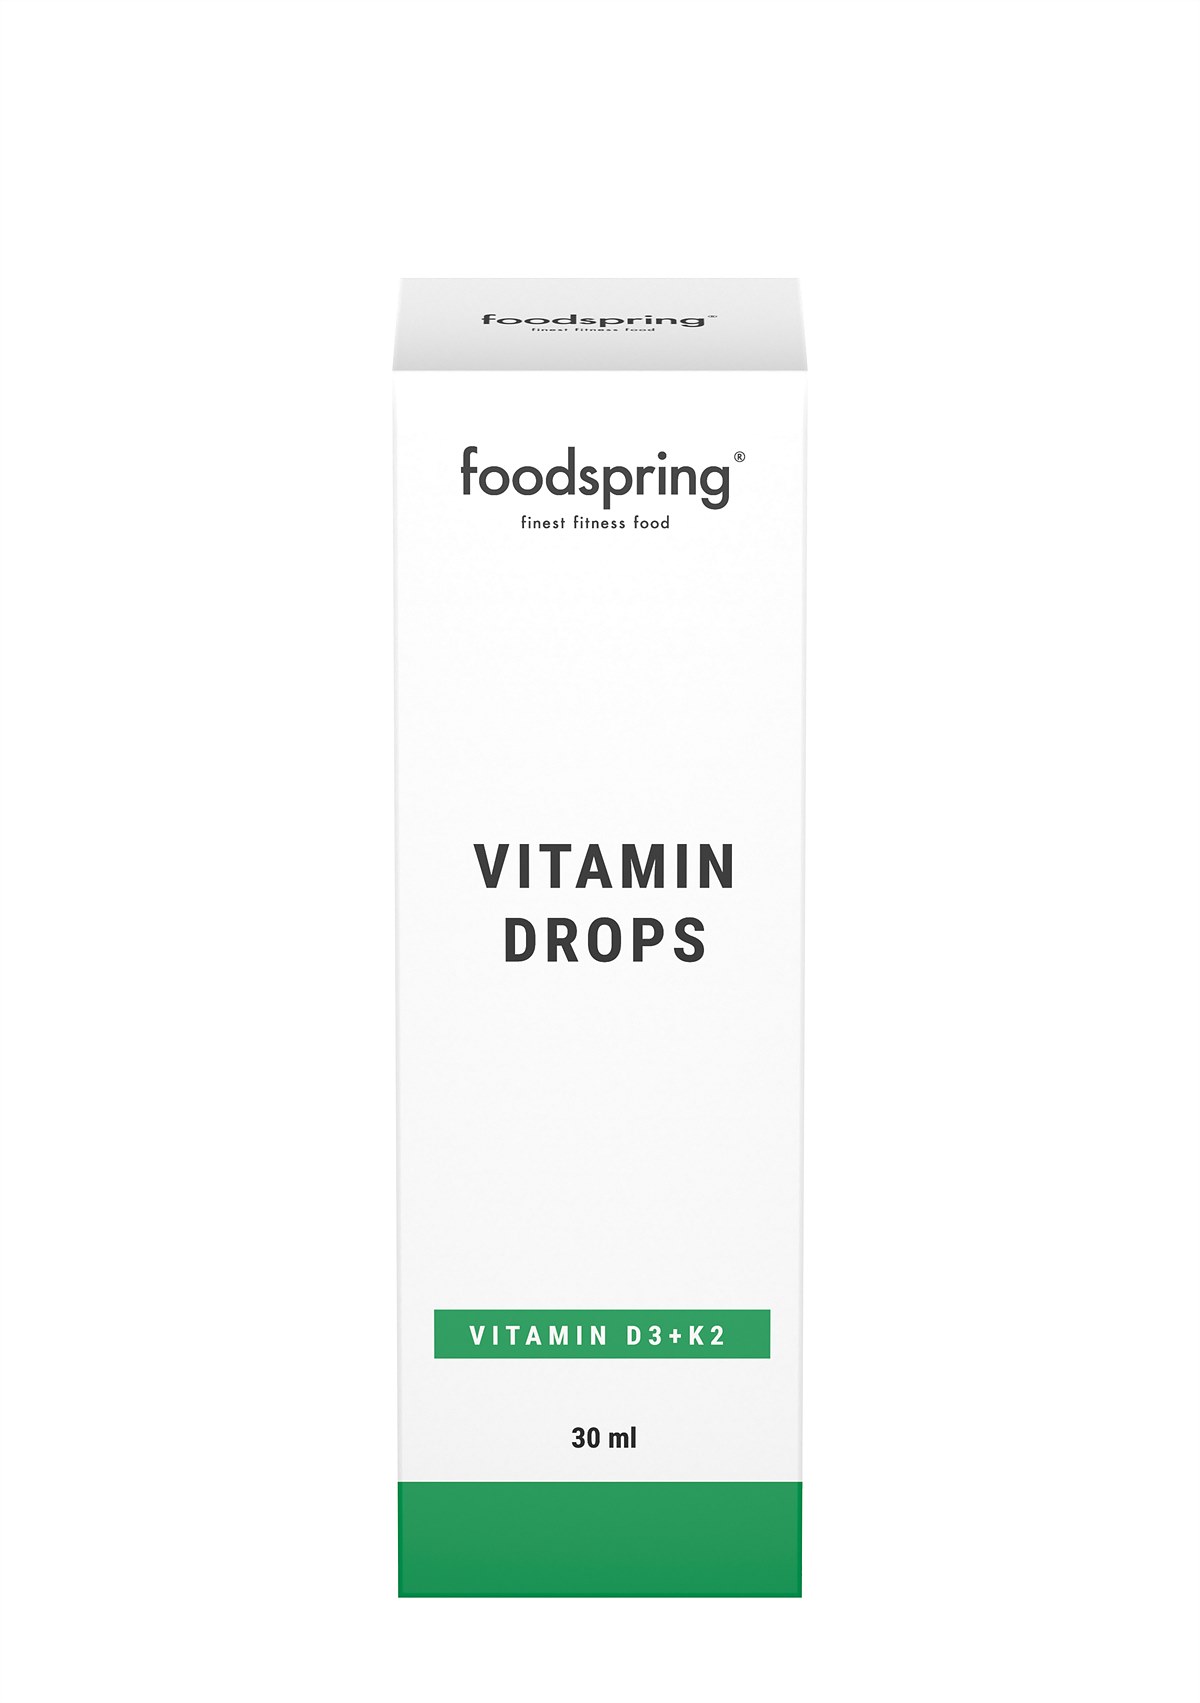 foodspring Vitamin Drops_EUR 24,99_3